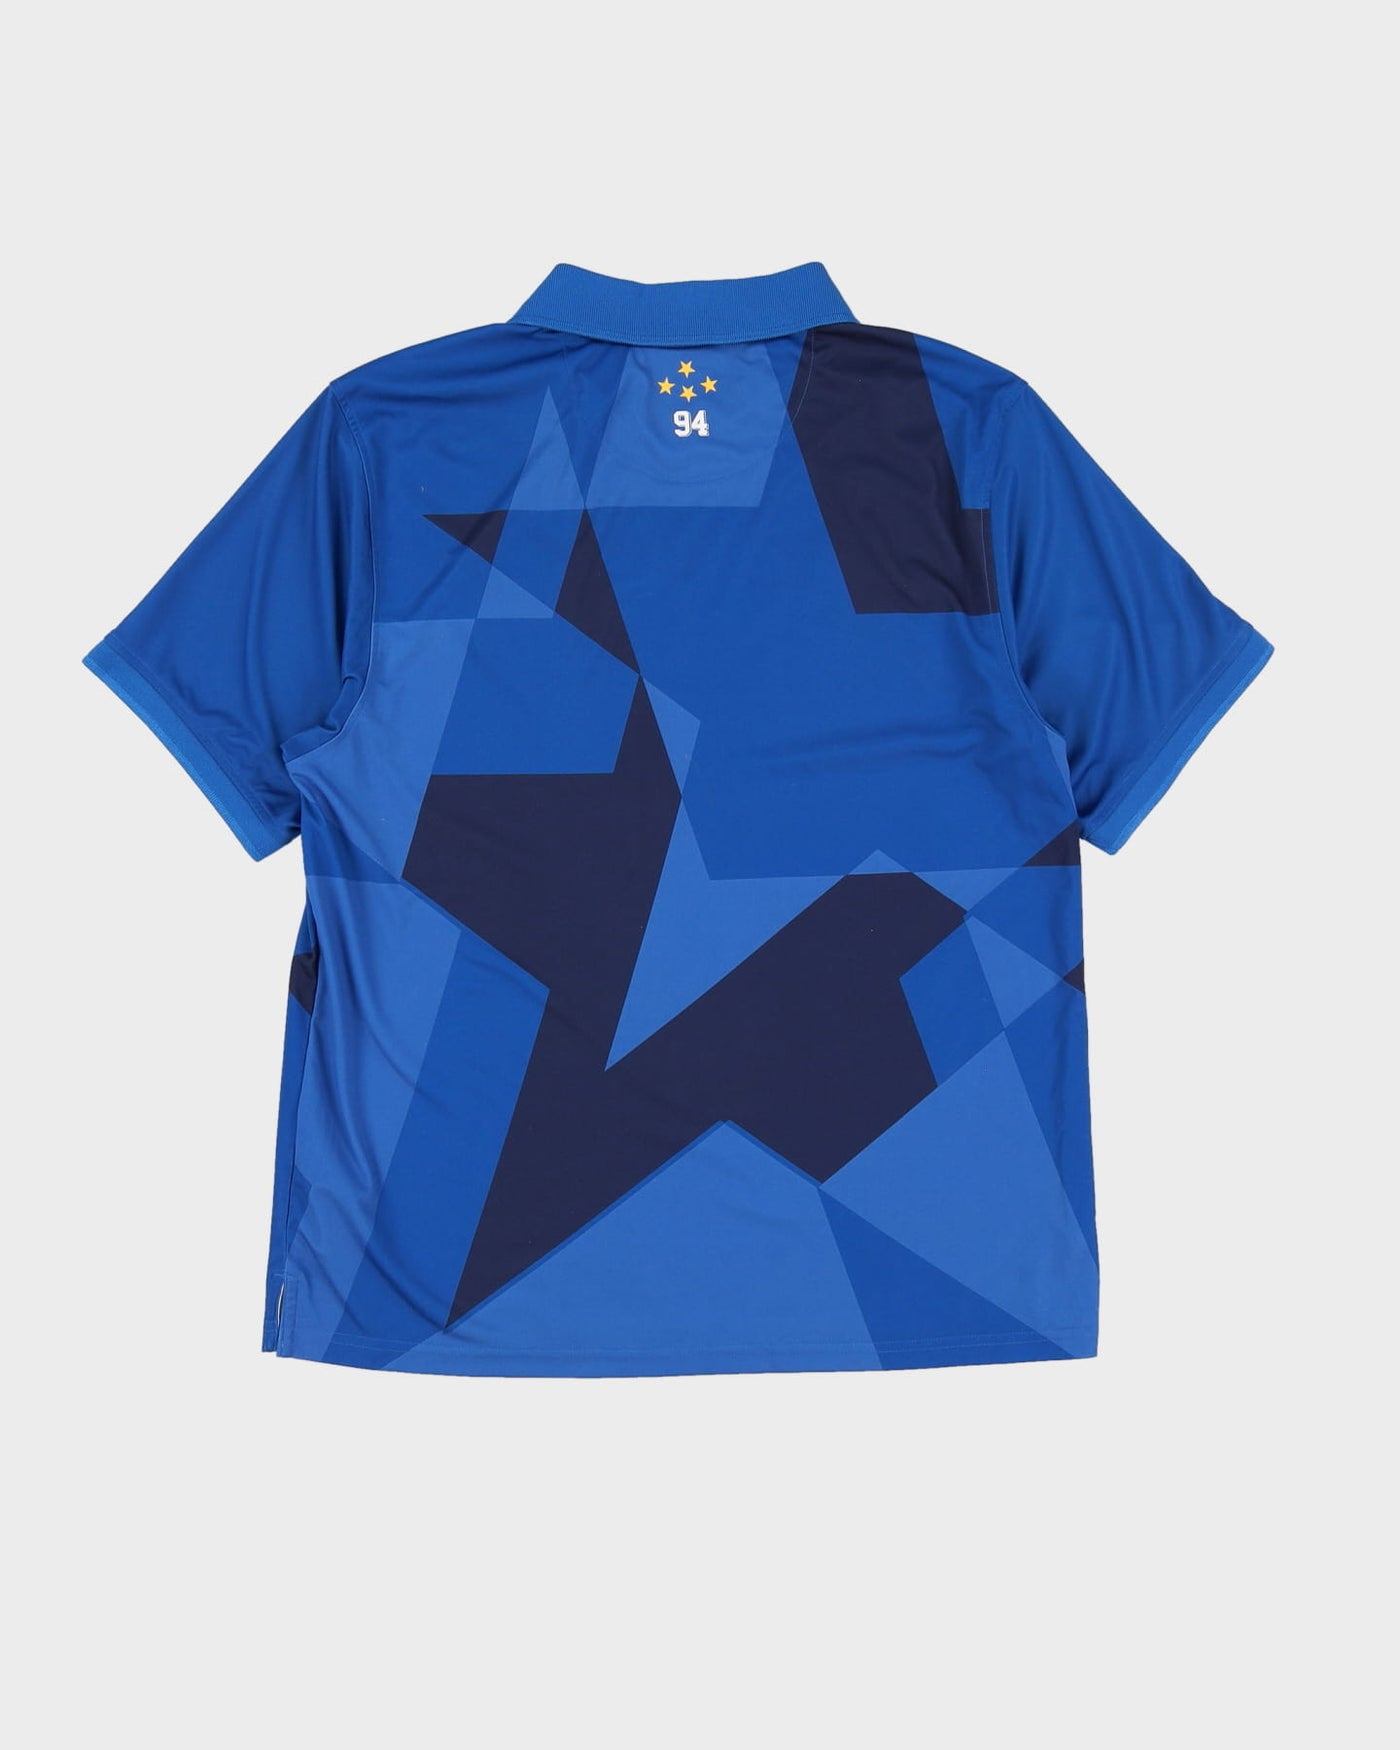 00s Brazil 94 Blue Star Design Nike Football Shirt - L